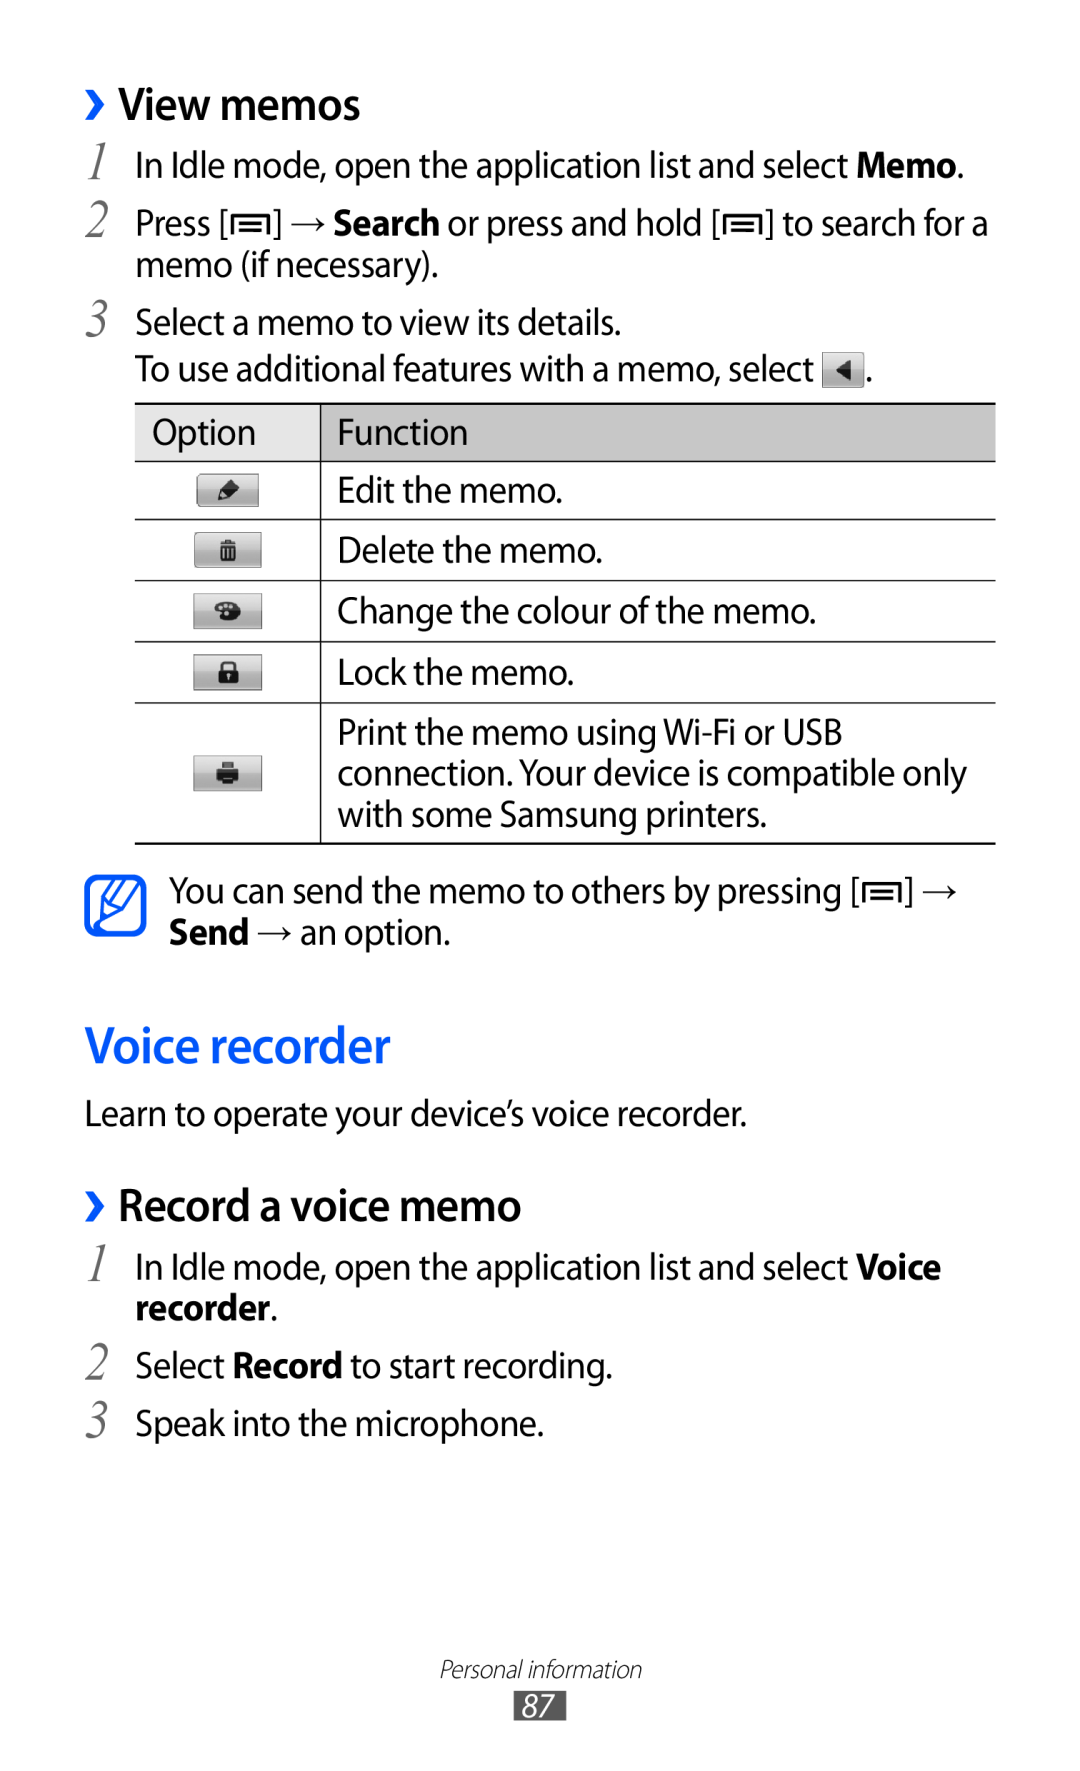 Samsung GT-I9070 user manual Voice recorder, ››View memos, ››Record a voice memo 